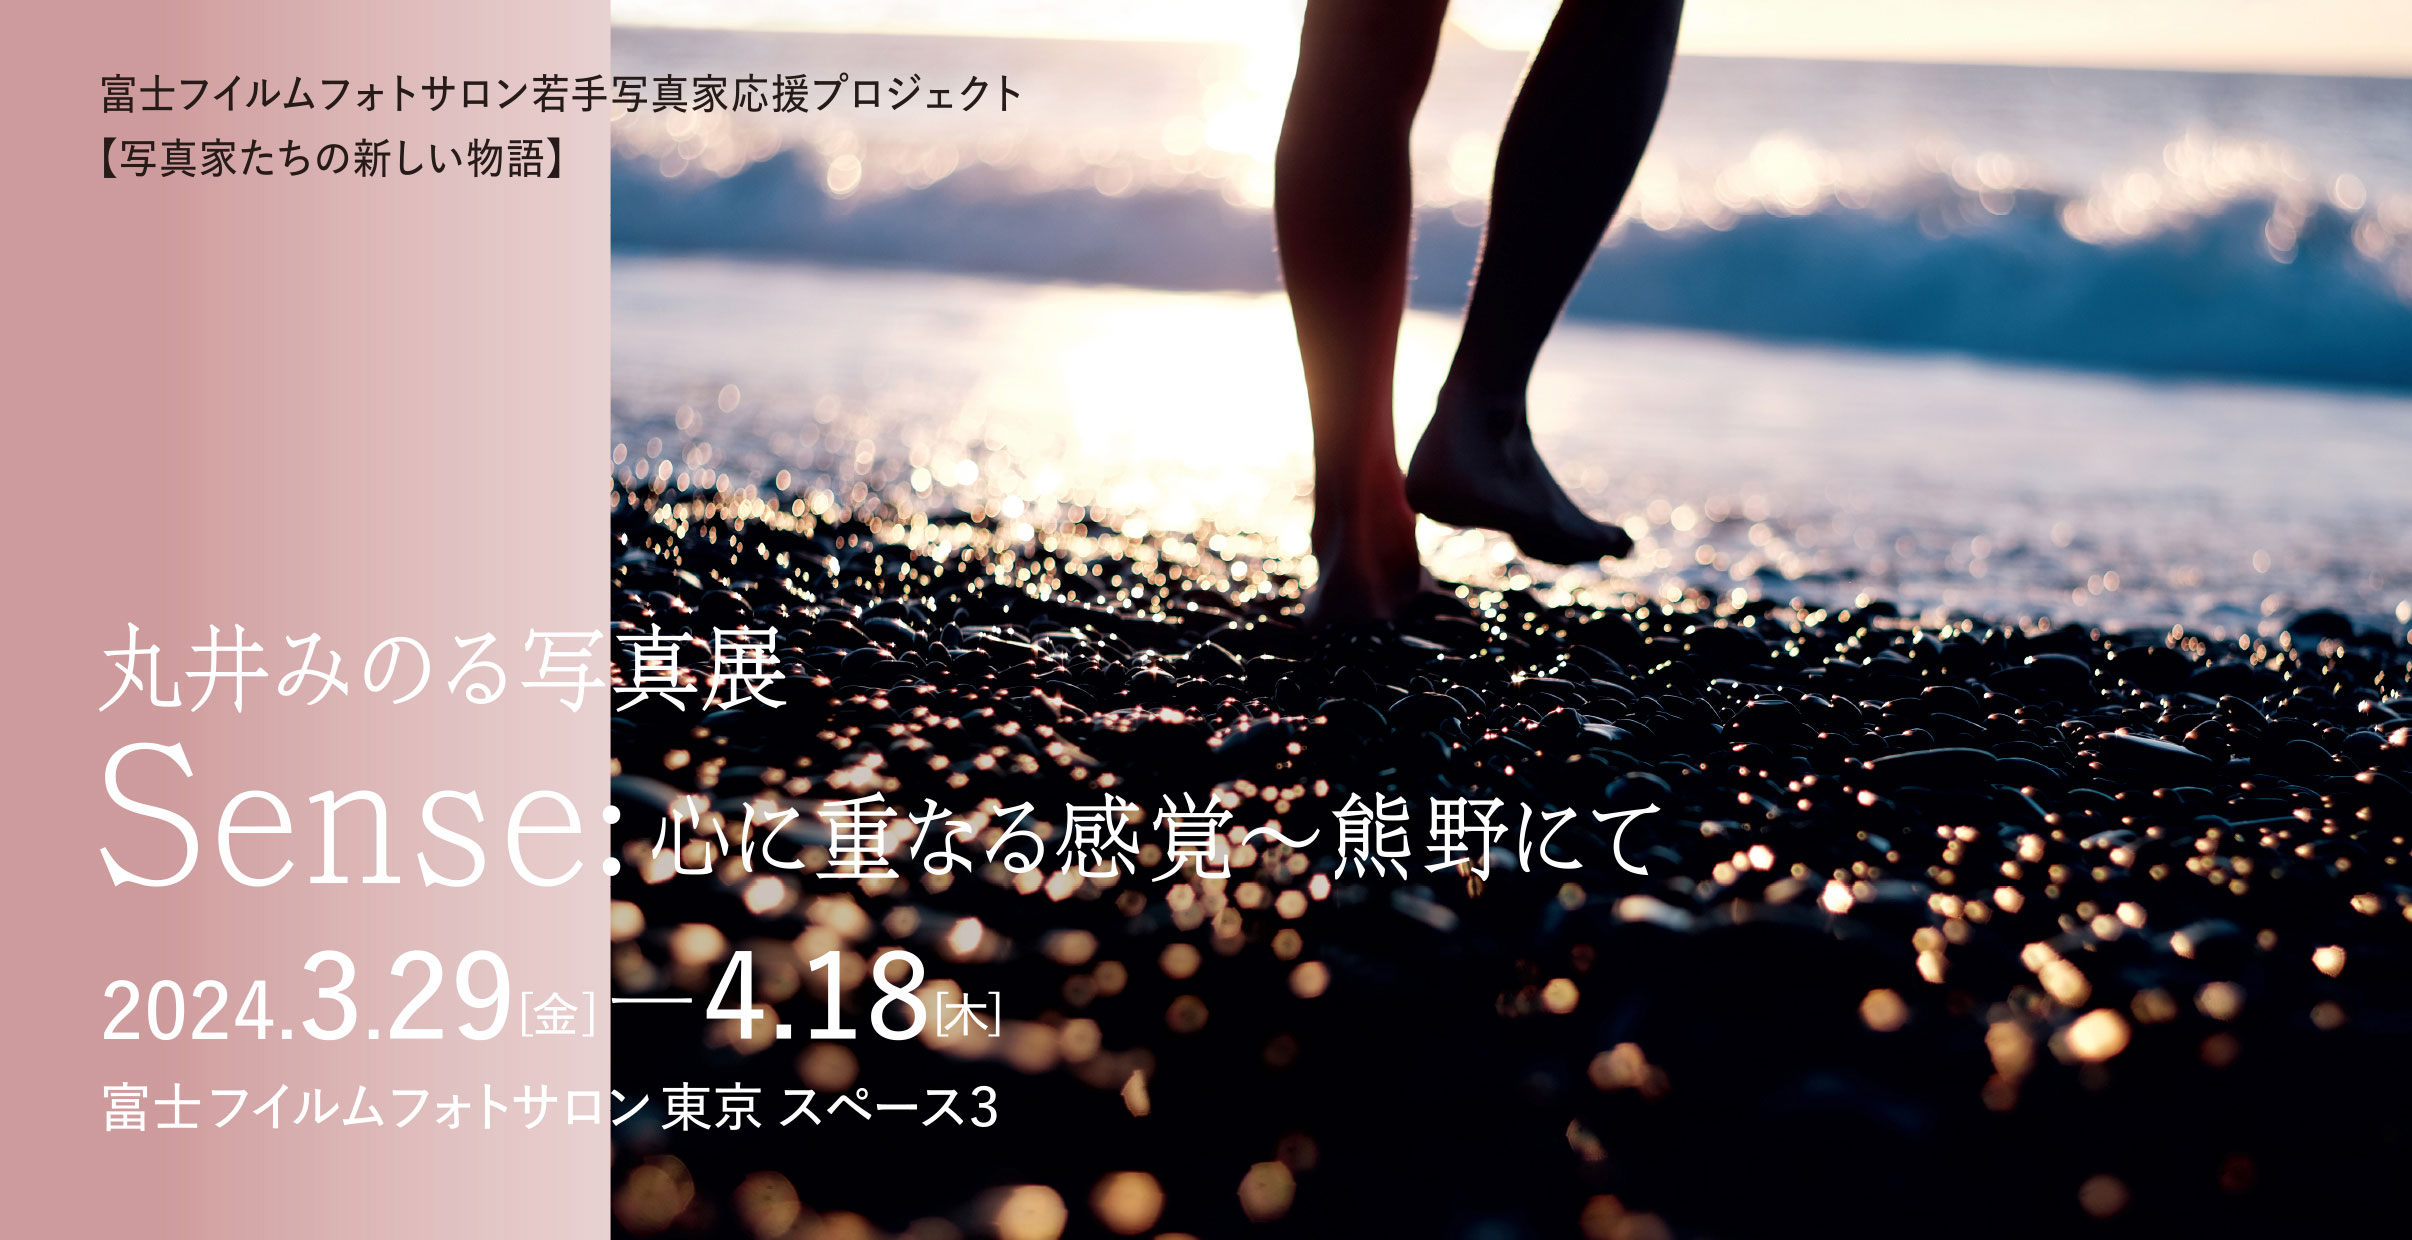 [image]丸井みのる写真展「Sense」― 心に重なる感覚～熊野にて ―